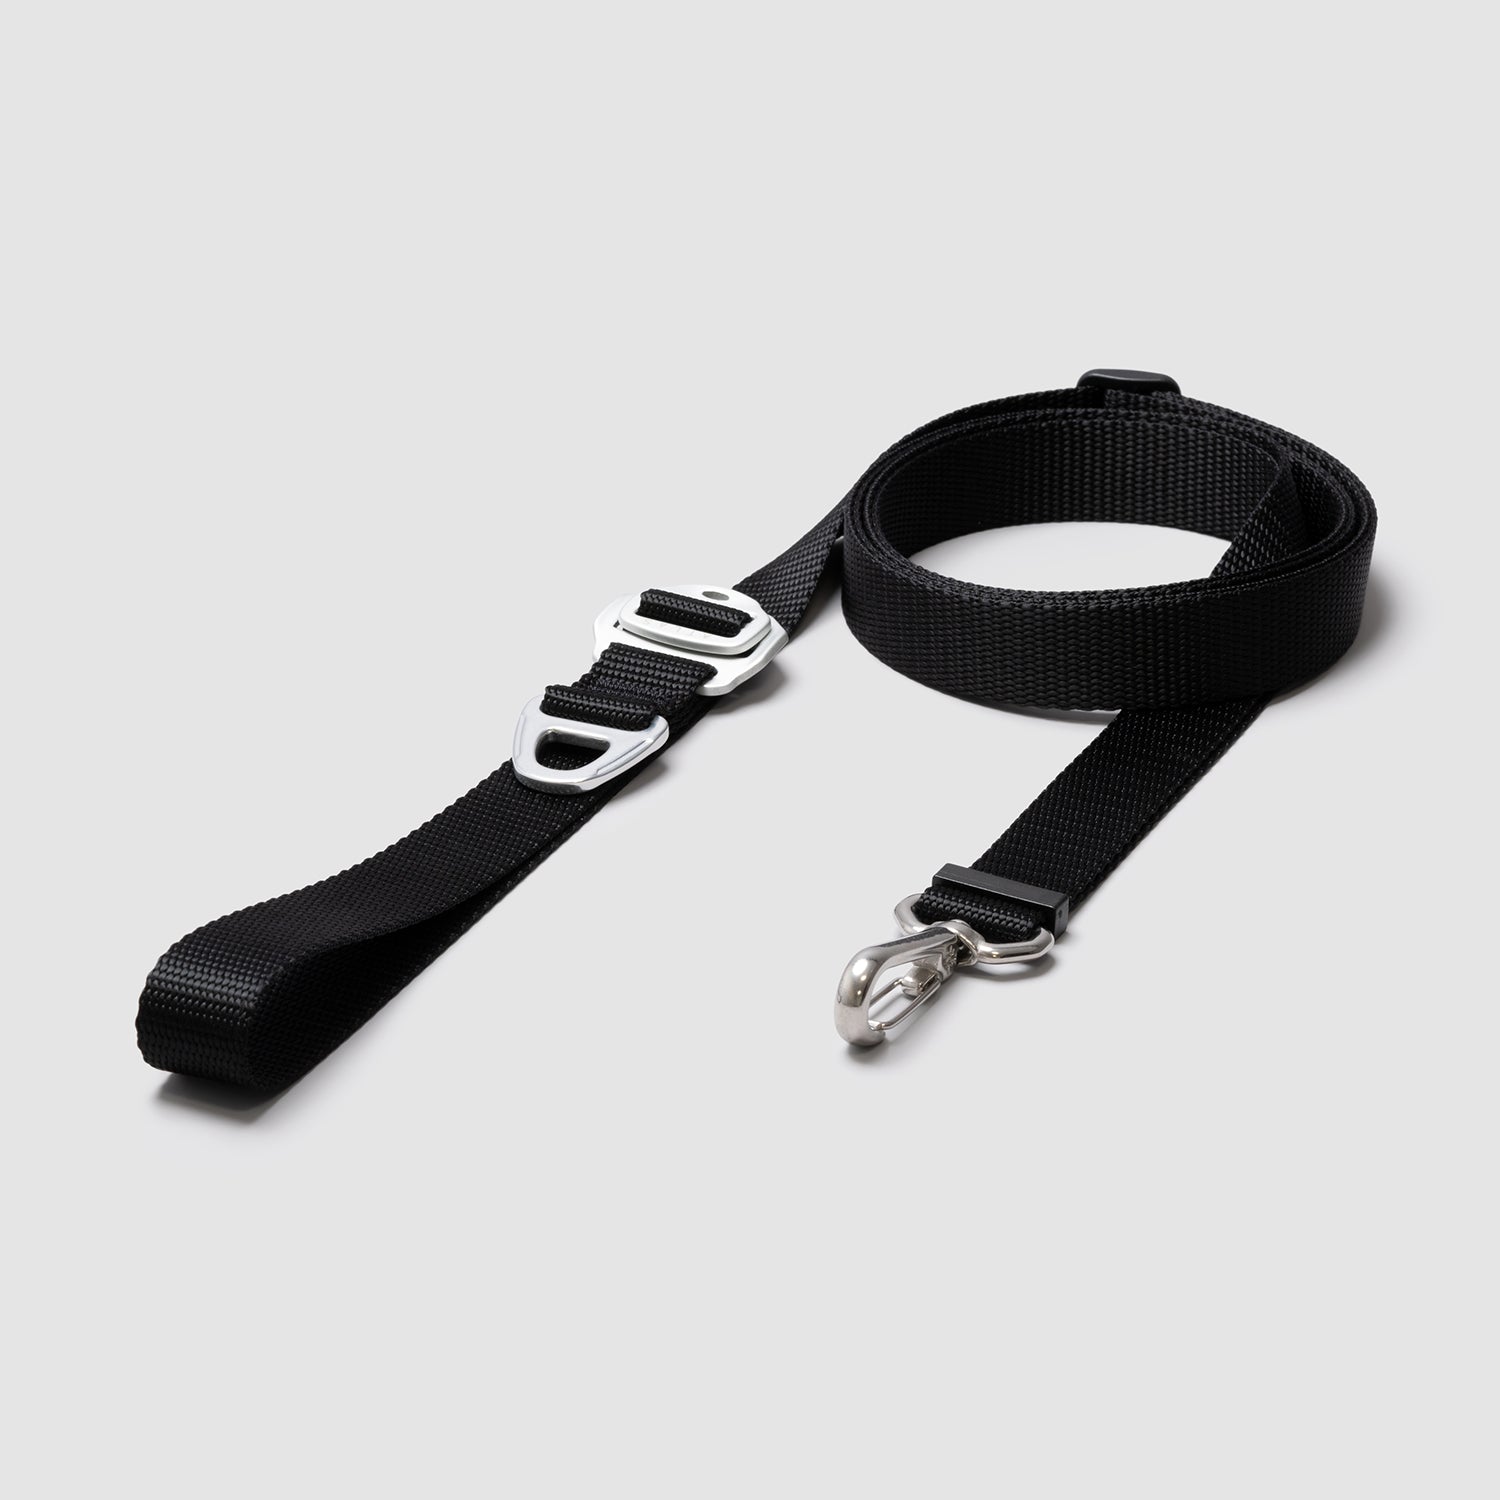 Reese's Pieces Dog collar handmade adjustable buckle 1